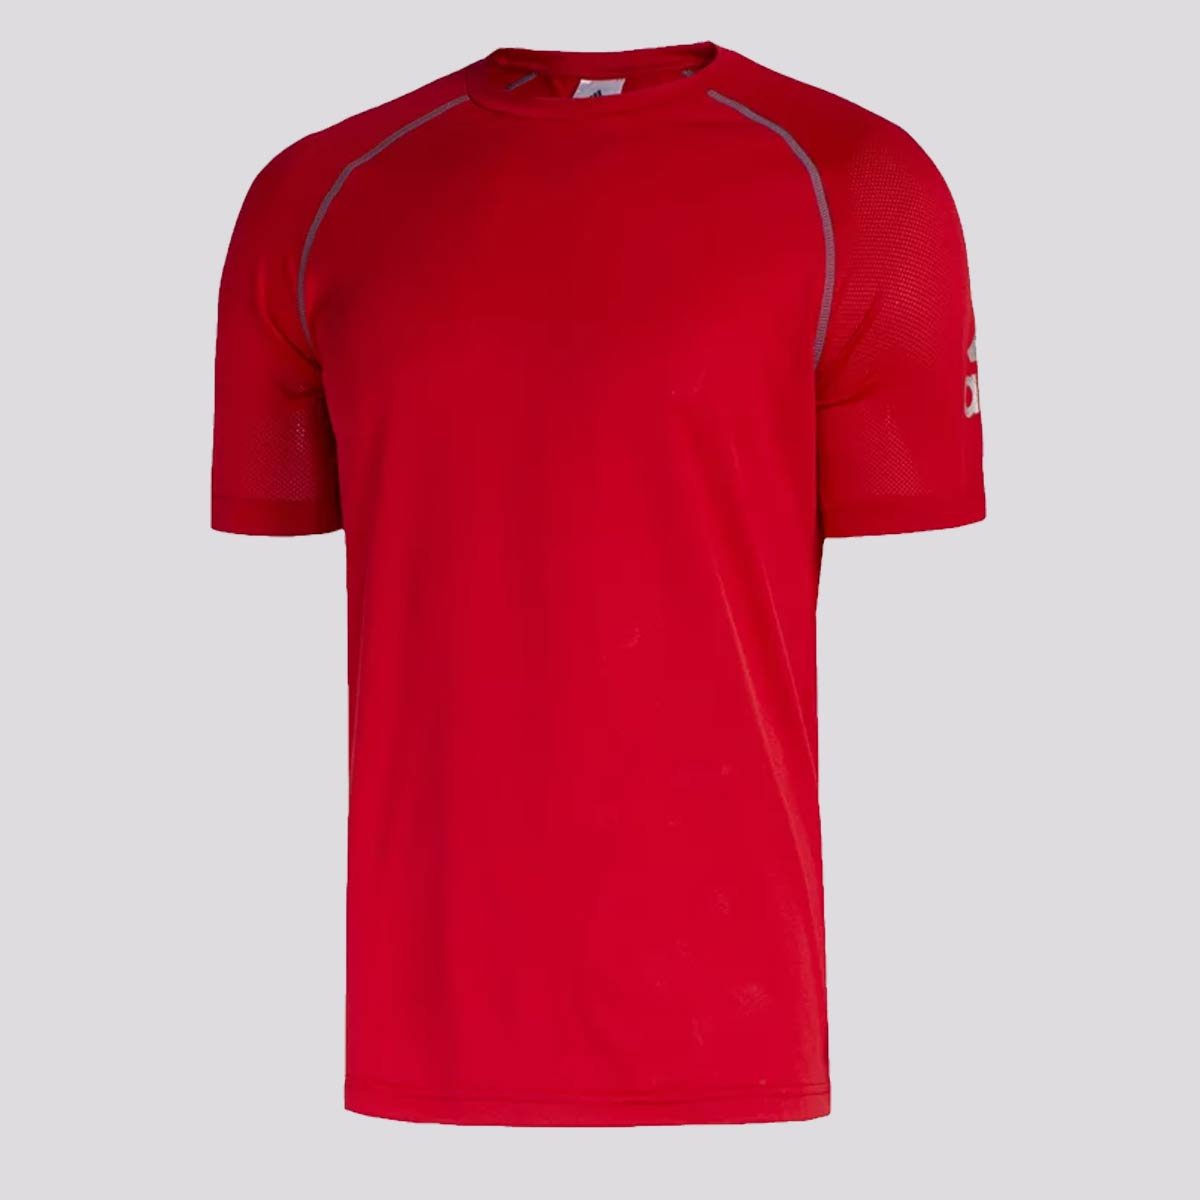 Camiseta Adidas Train WKT Vermelha